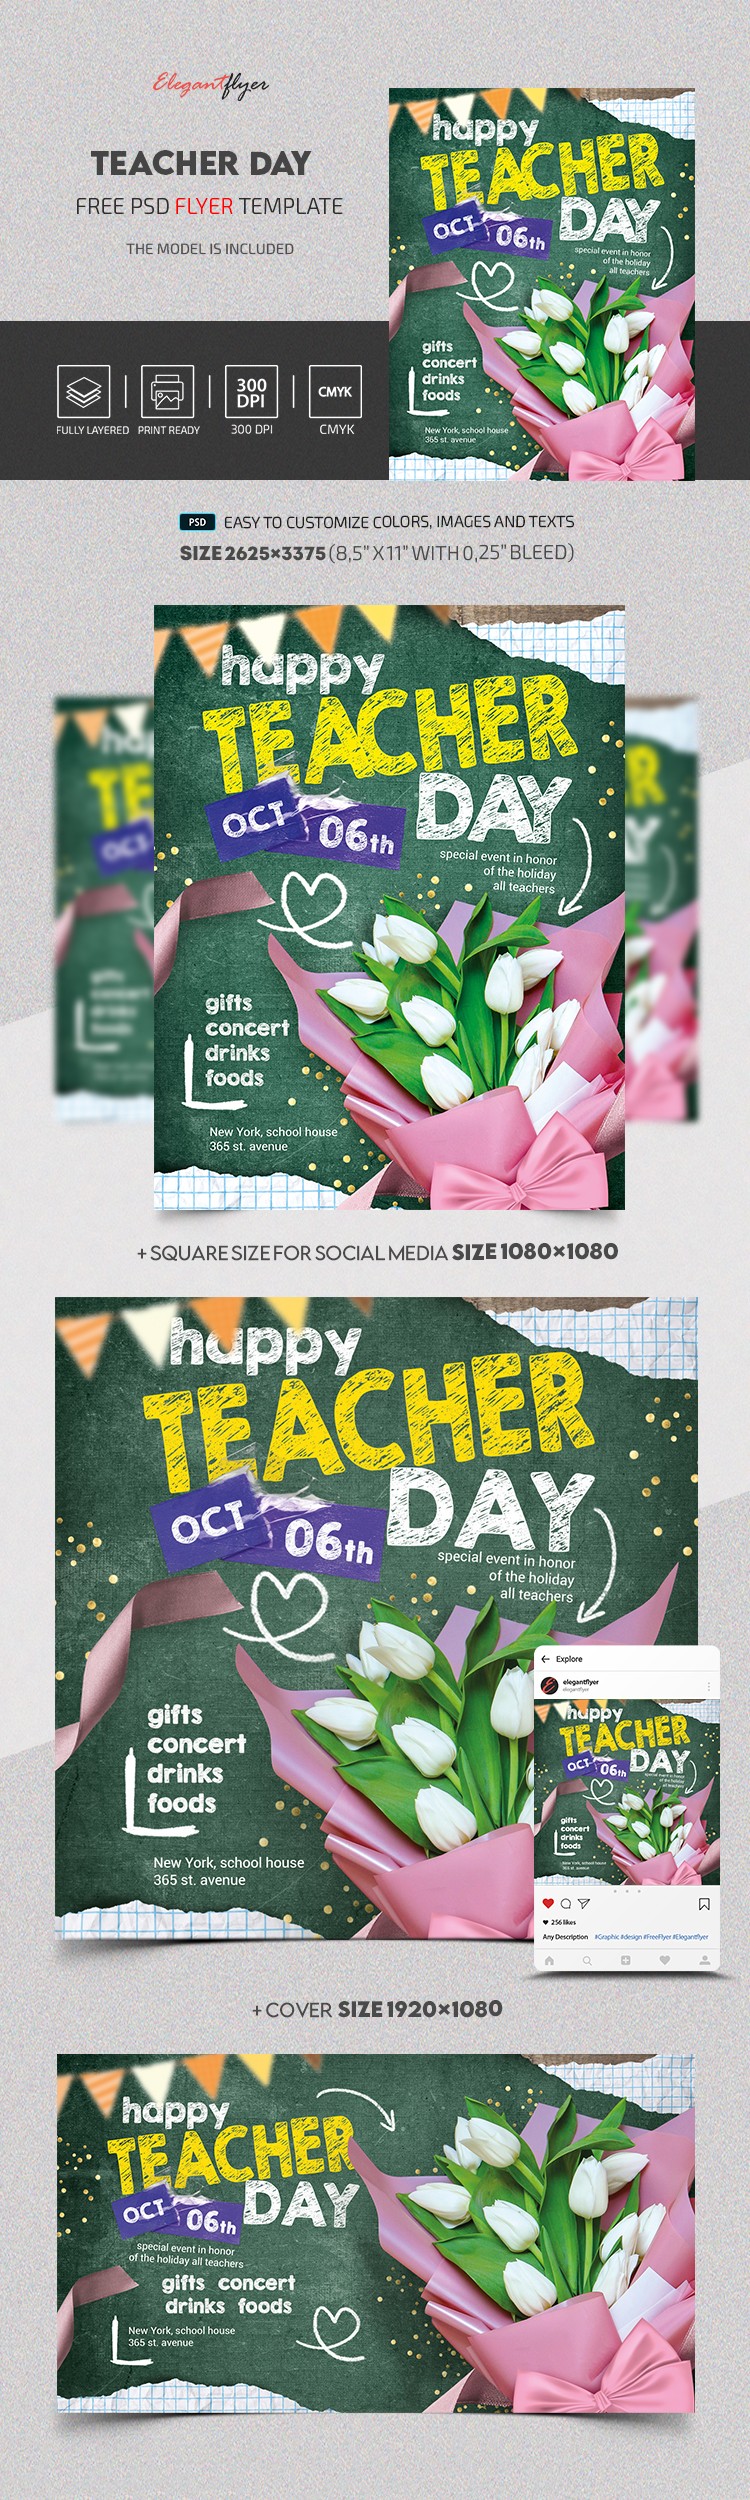 Journée des enseignants by ElegantFlyer